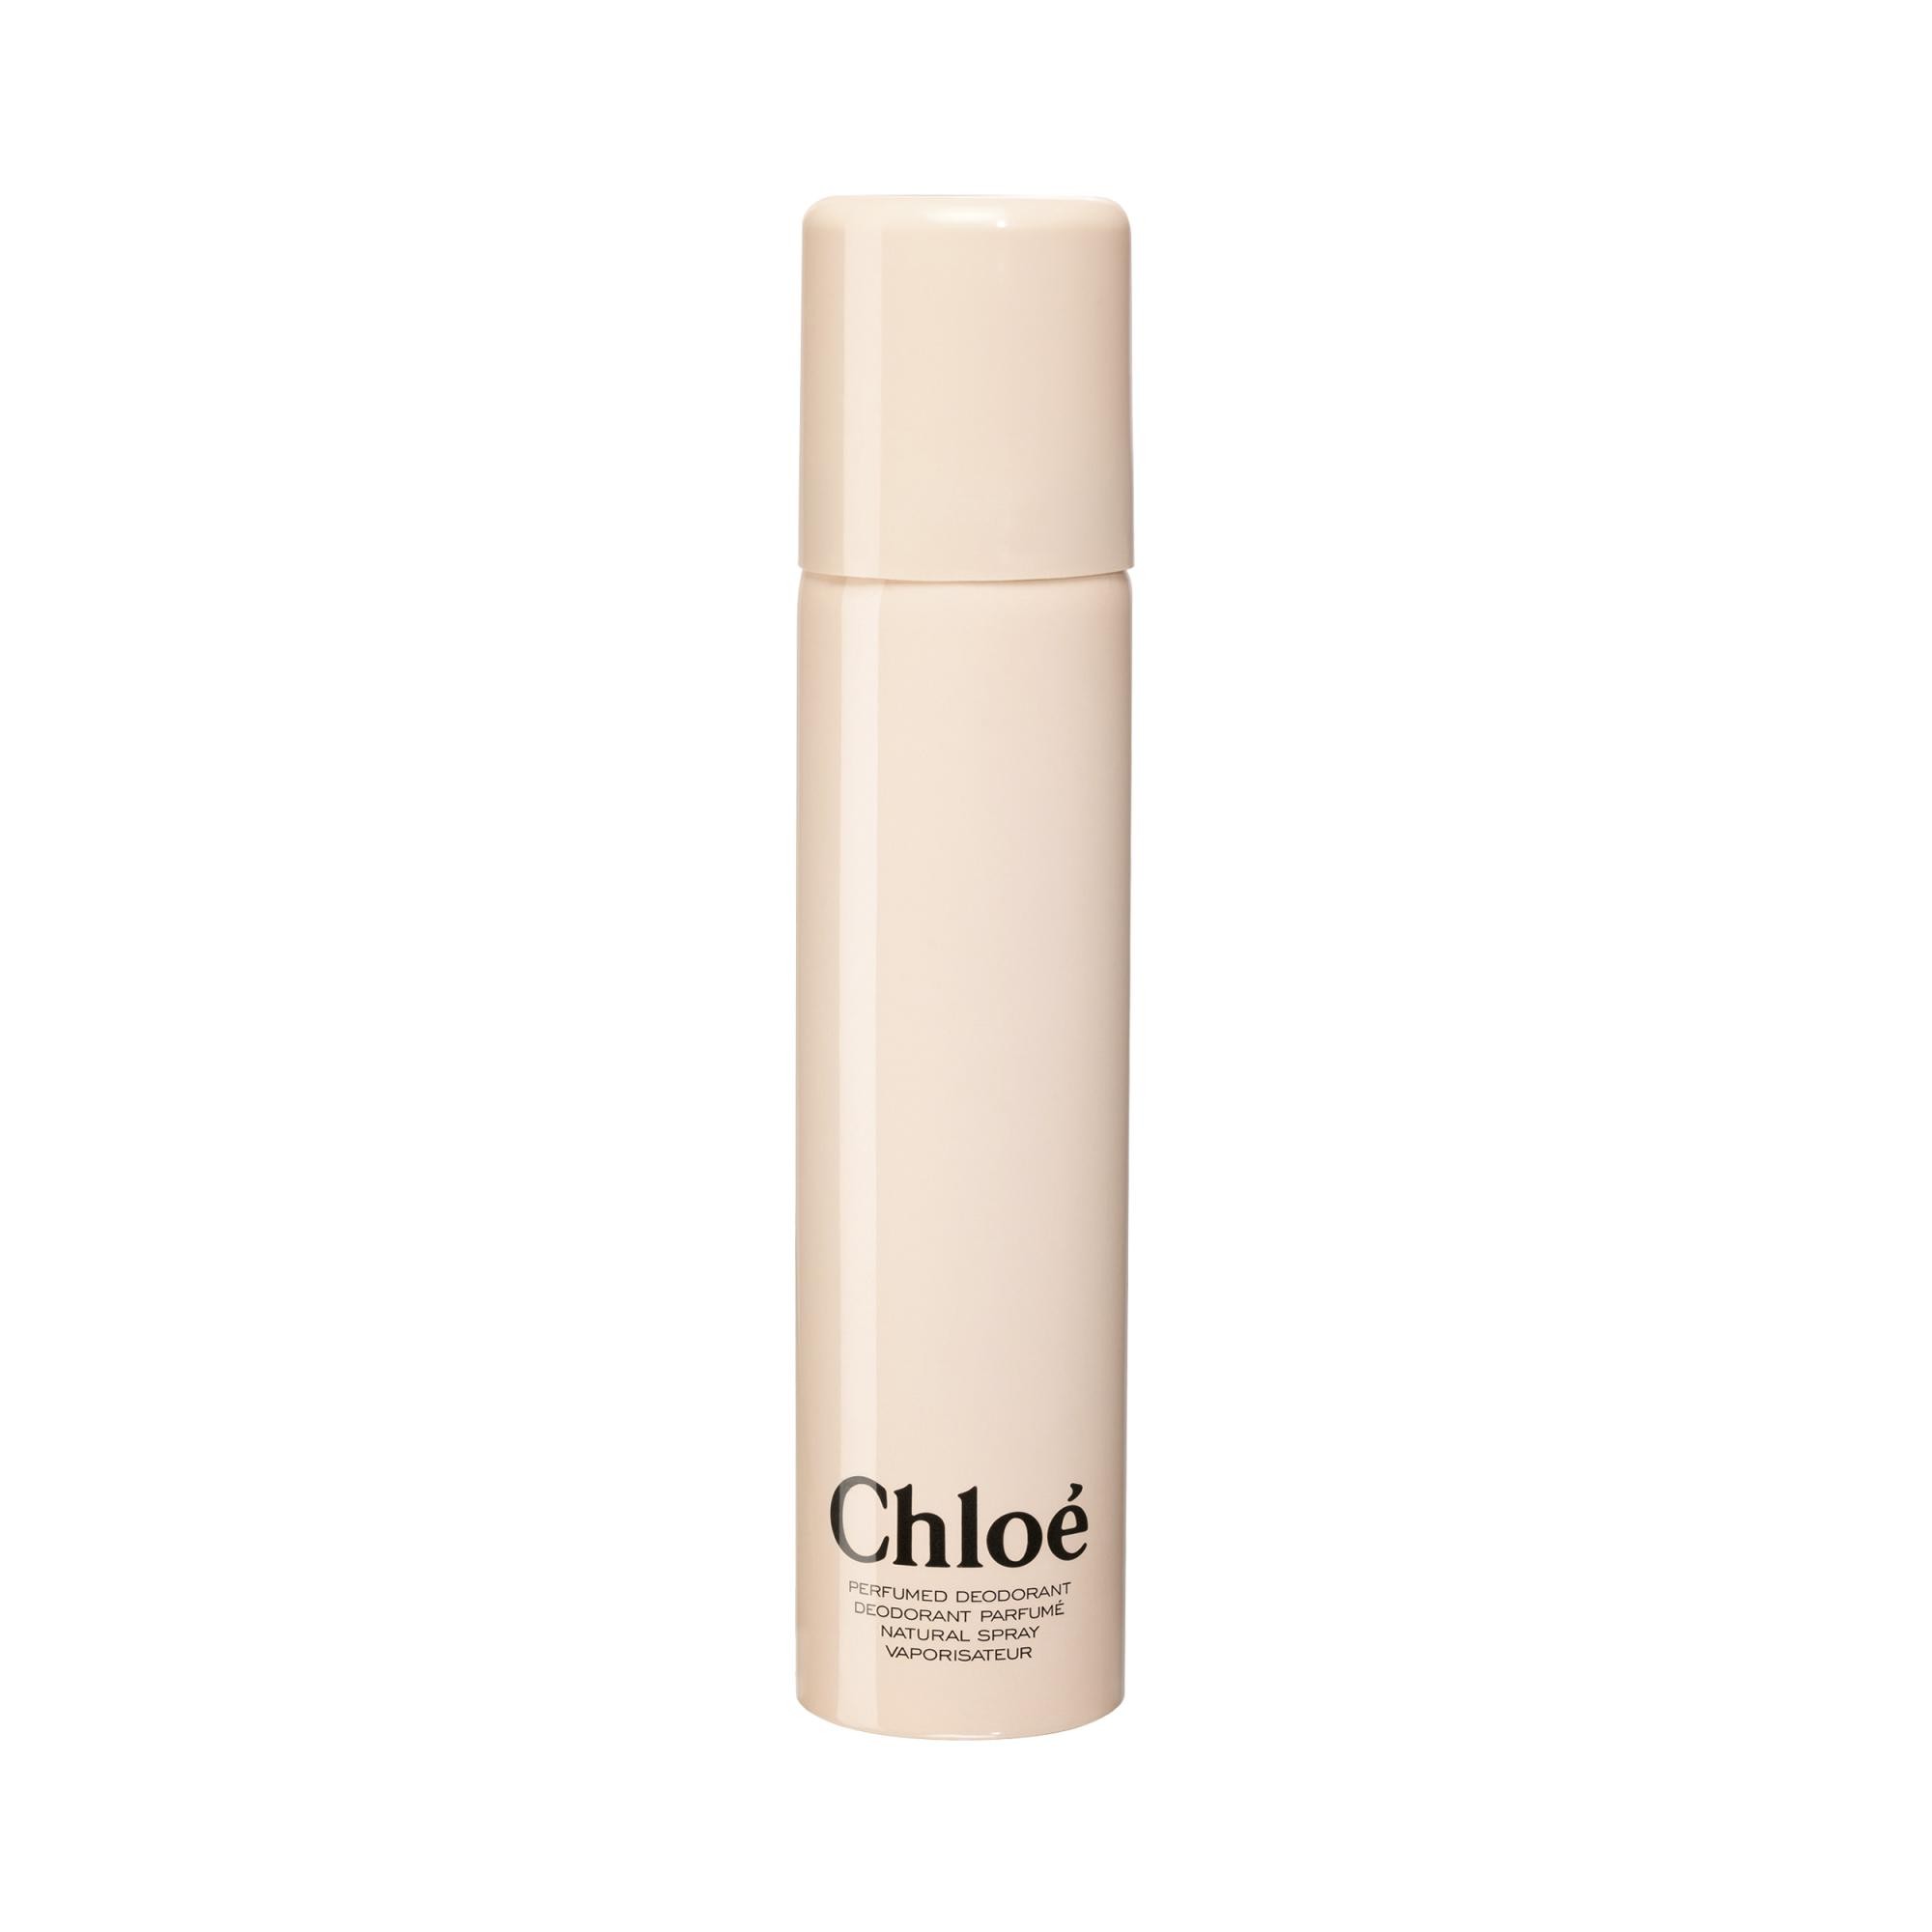 Chloé Signature deodorante spray 100ml